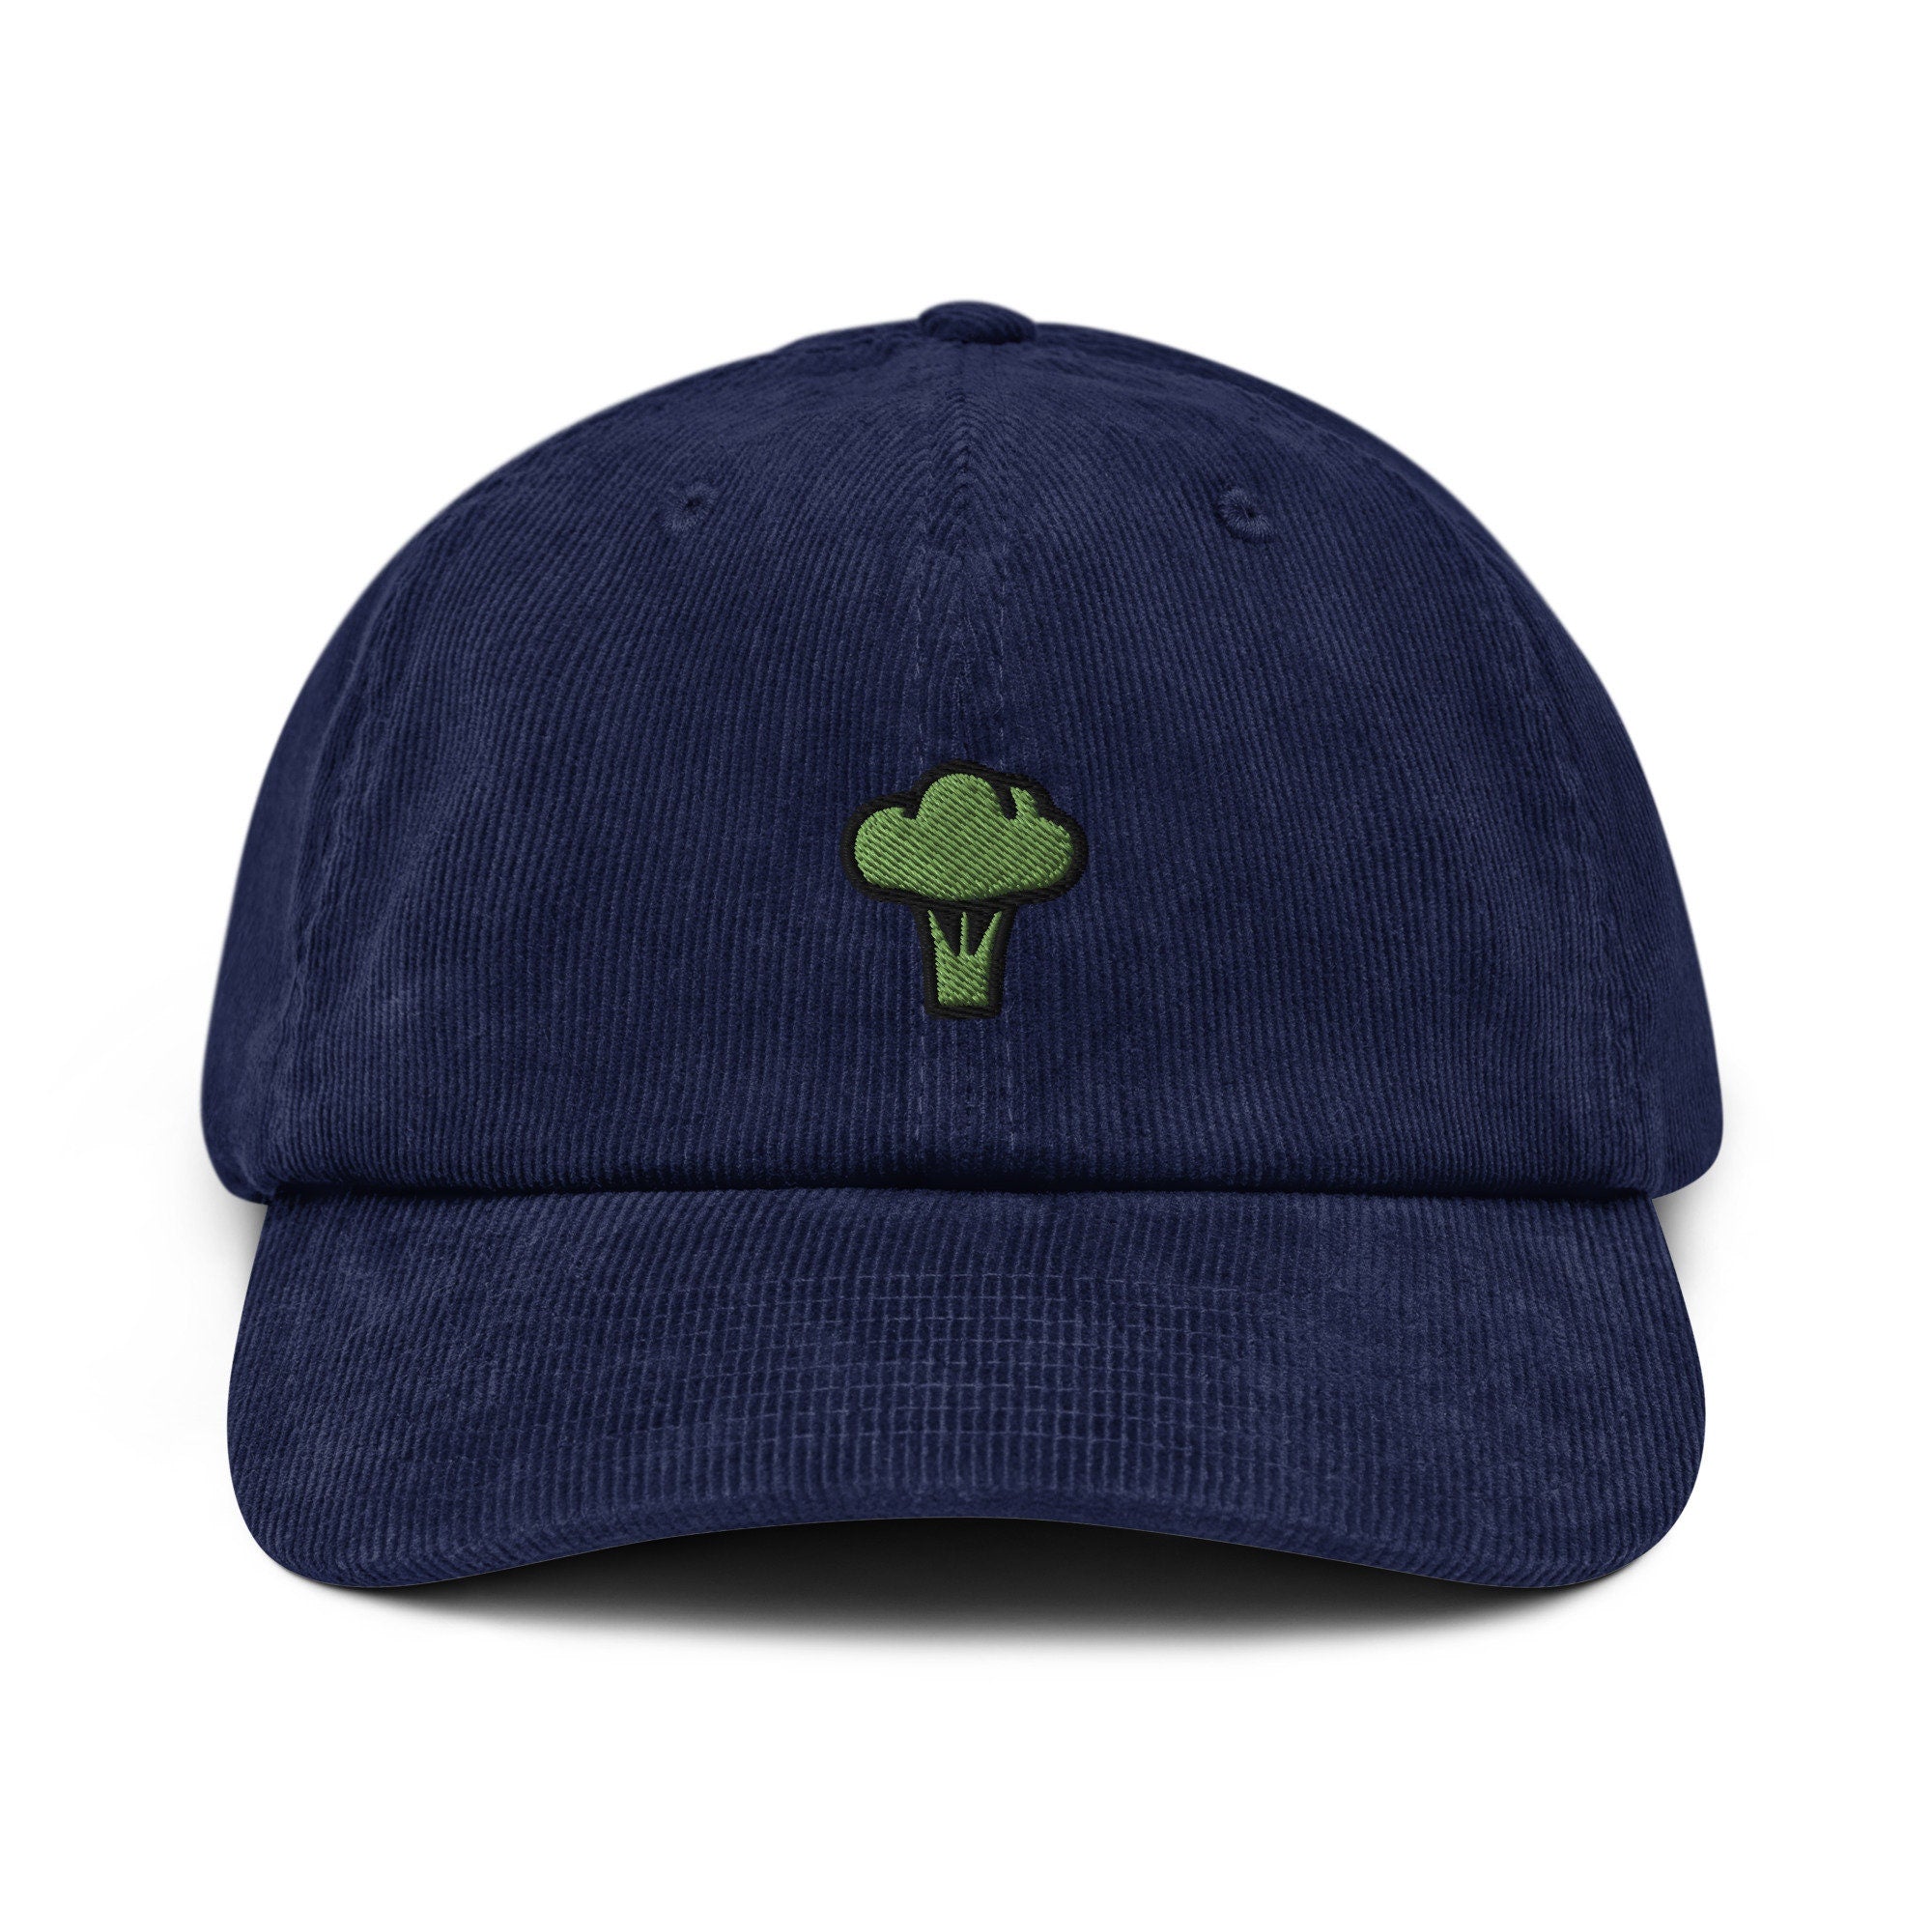 Broccoli Corduroy Hat, Handmade Embroidered Corduroy Dad Cap - Multiple Colors